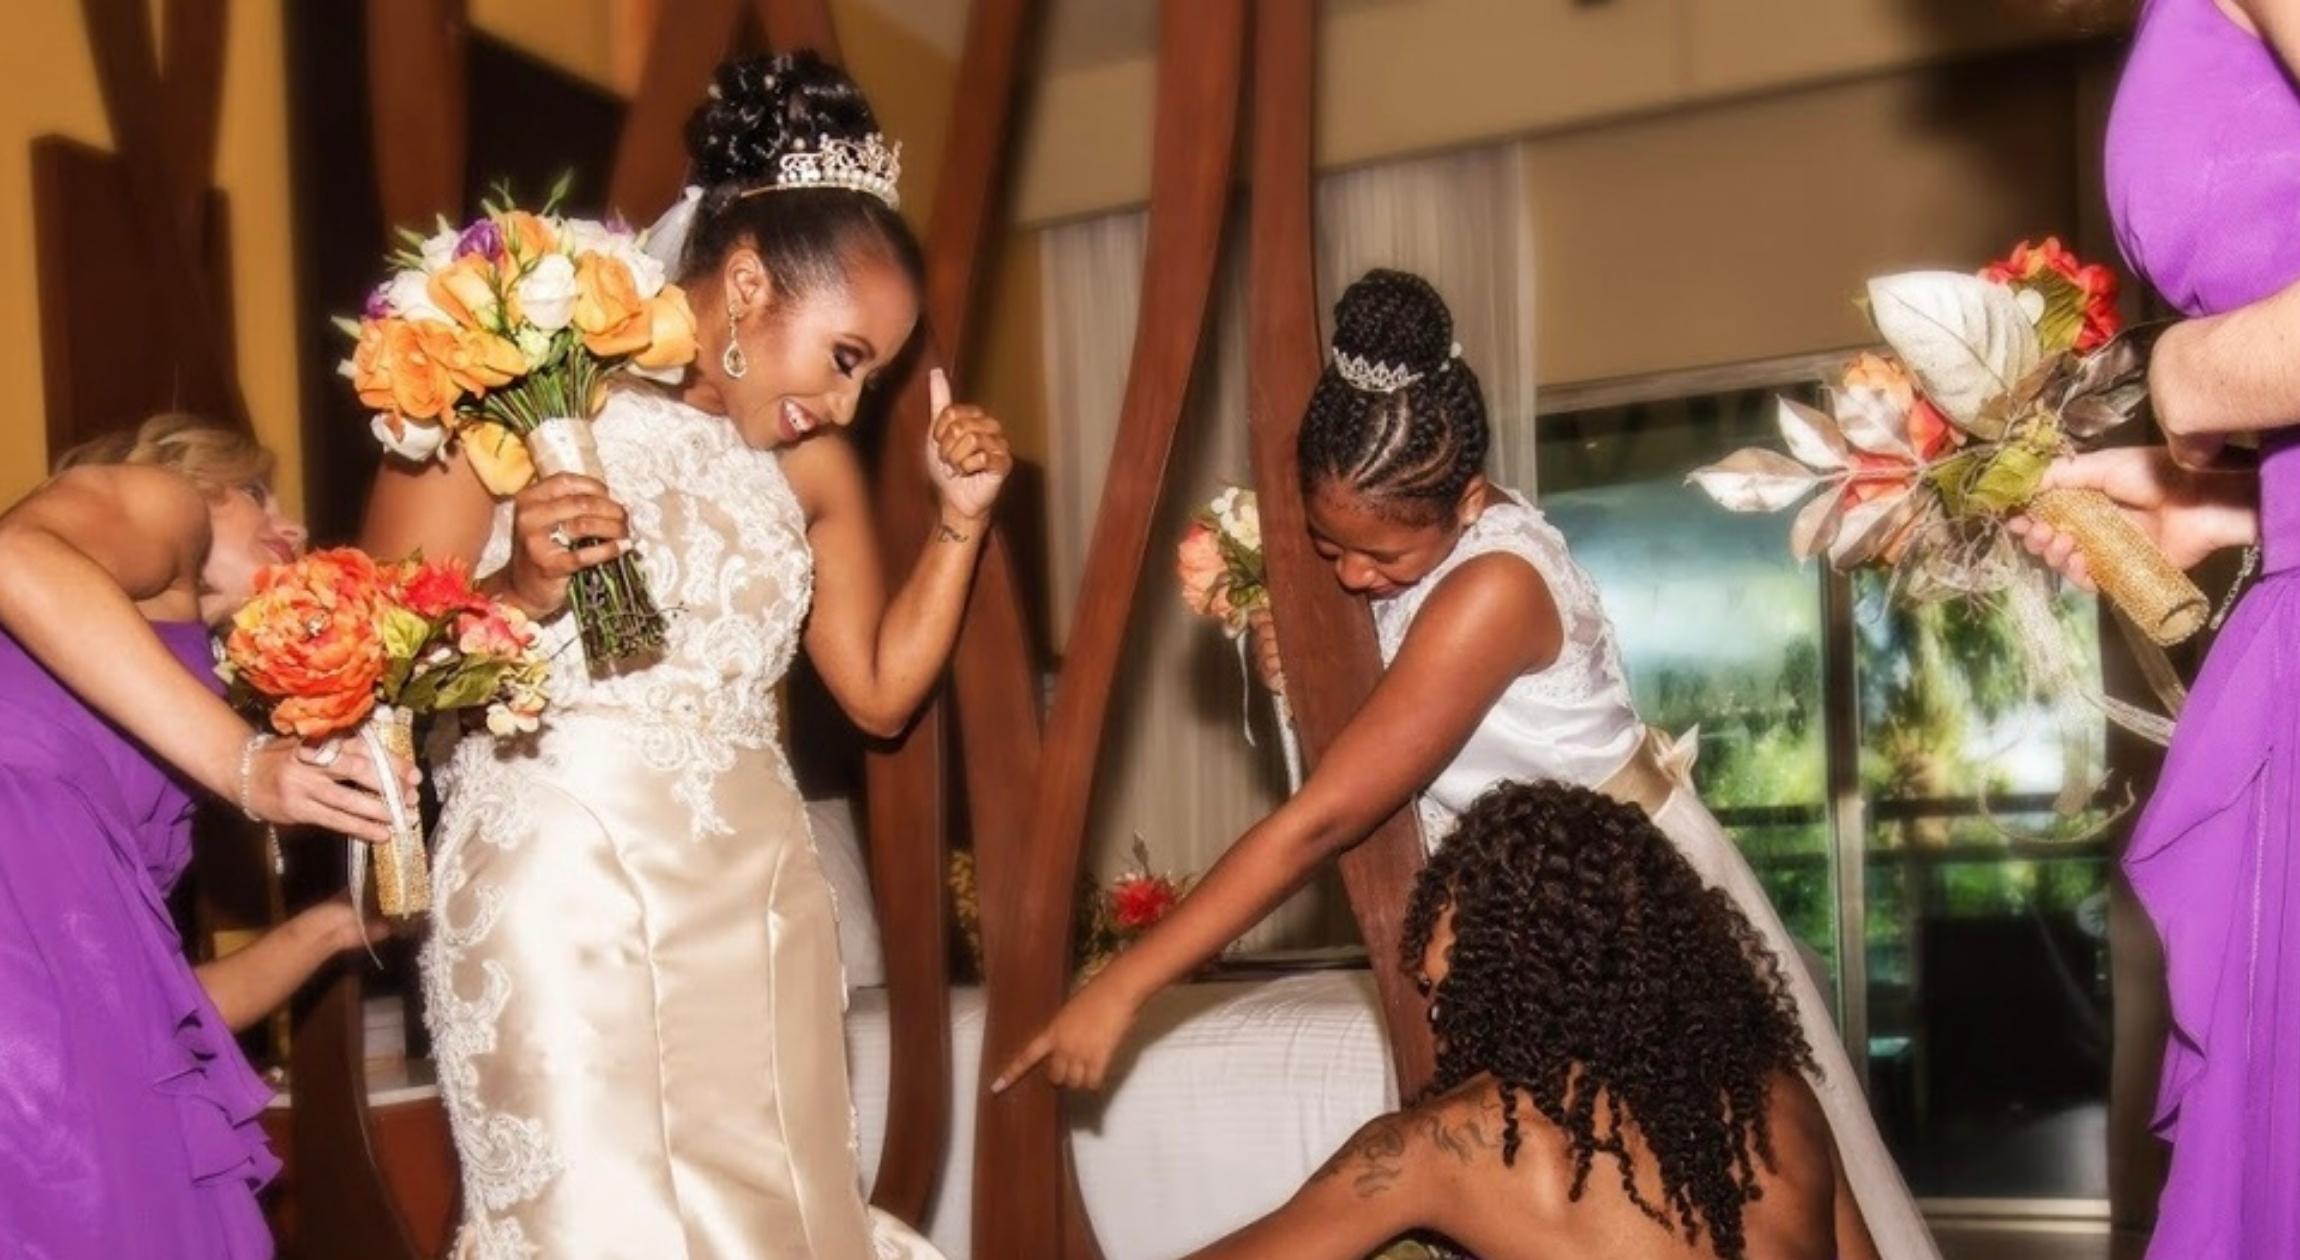 Several Black women helping a Black bride in her wedding dress